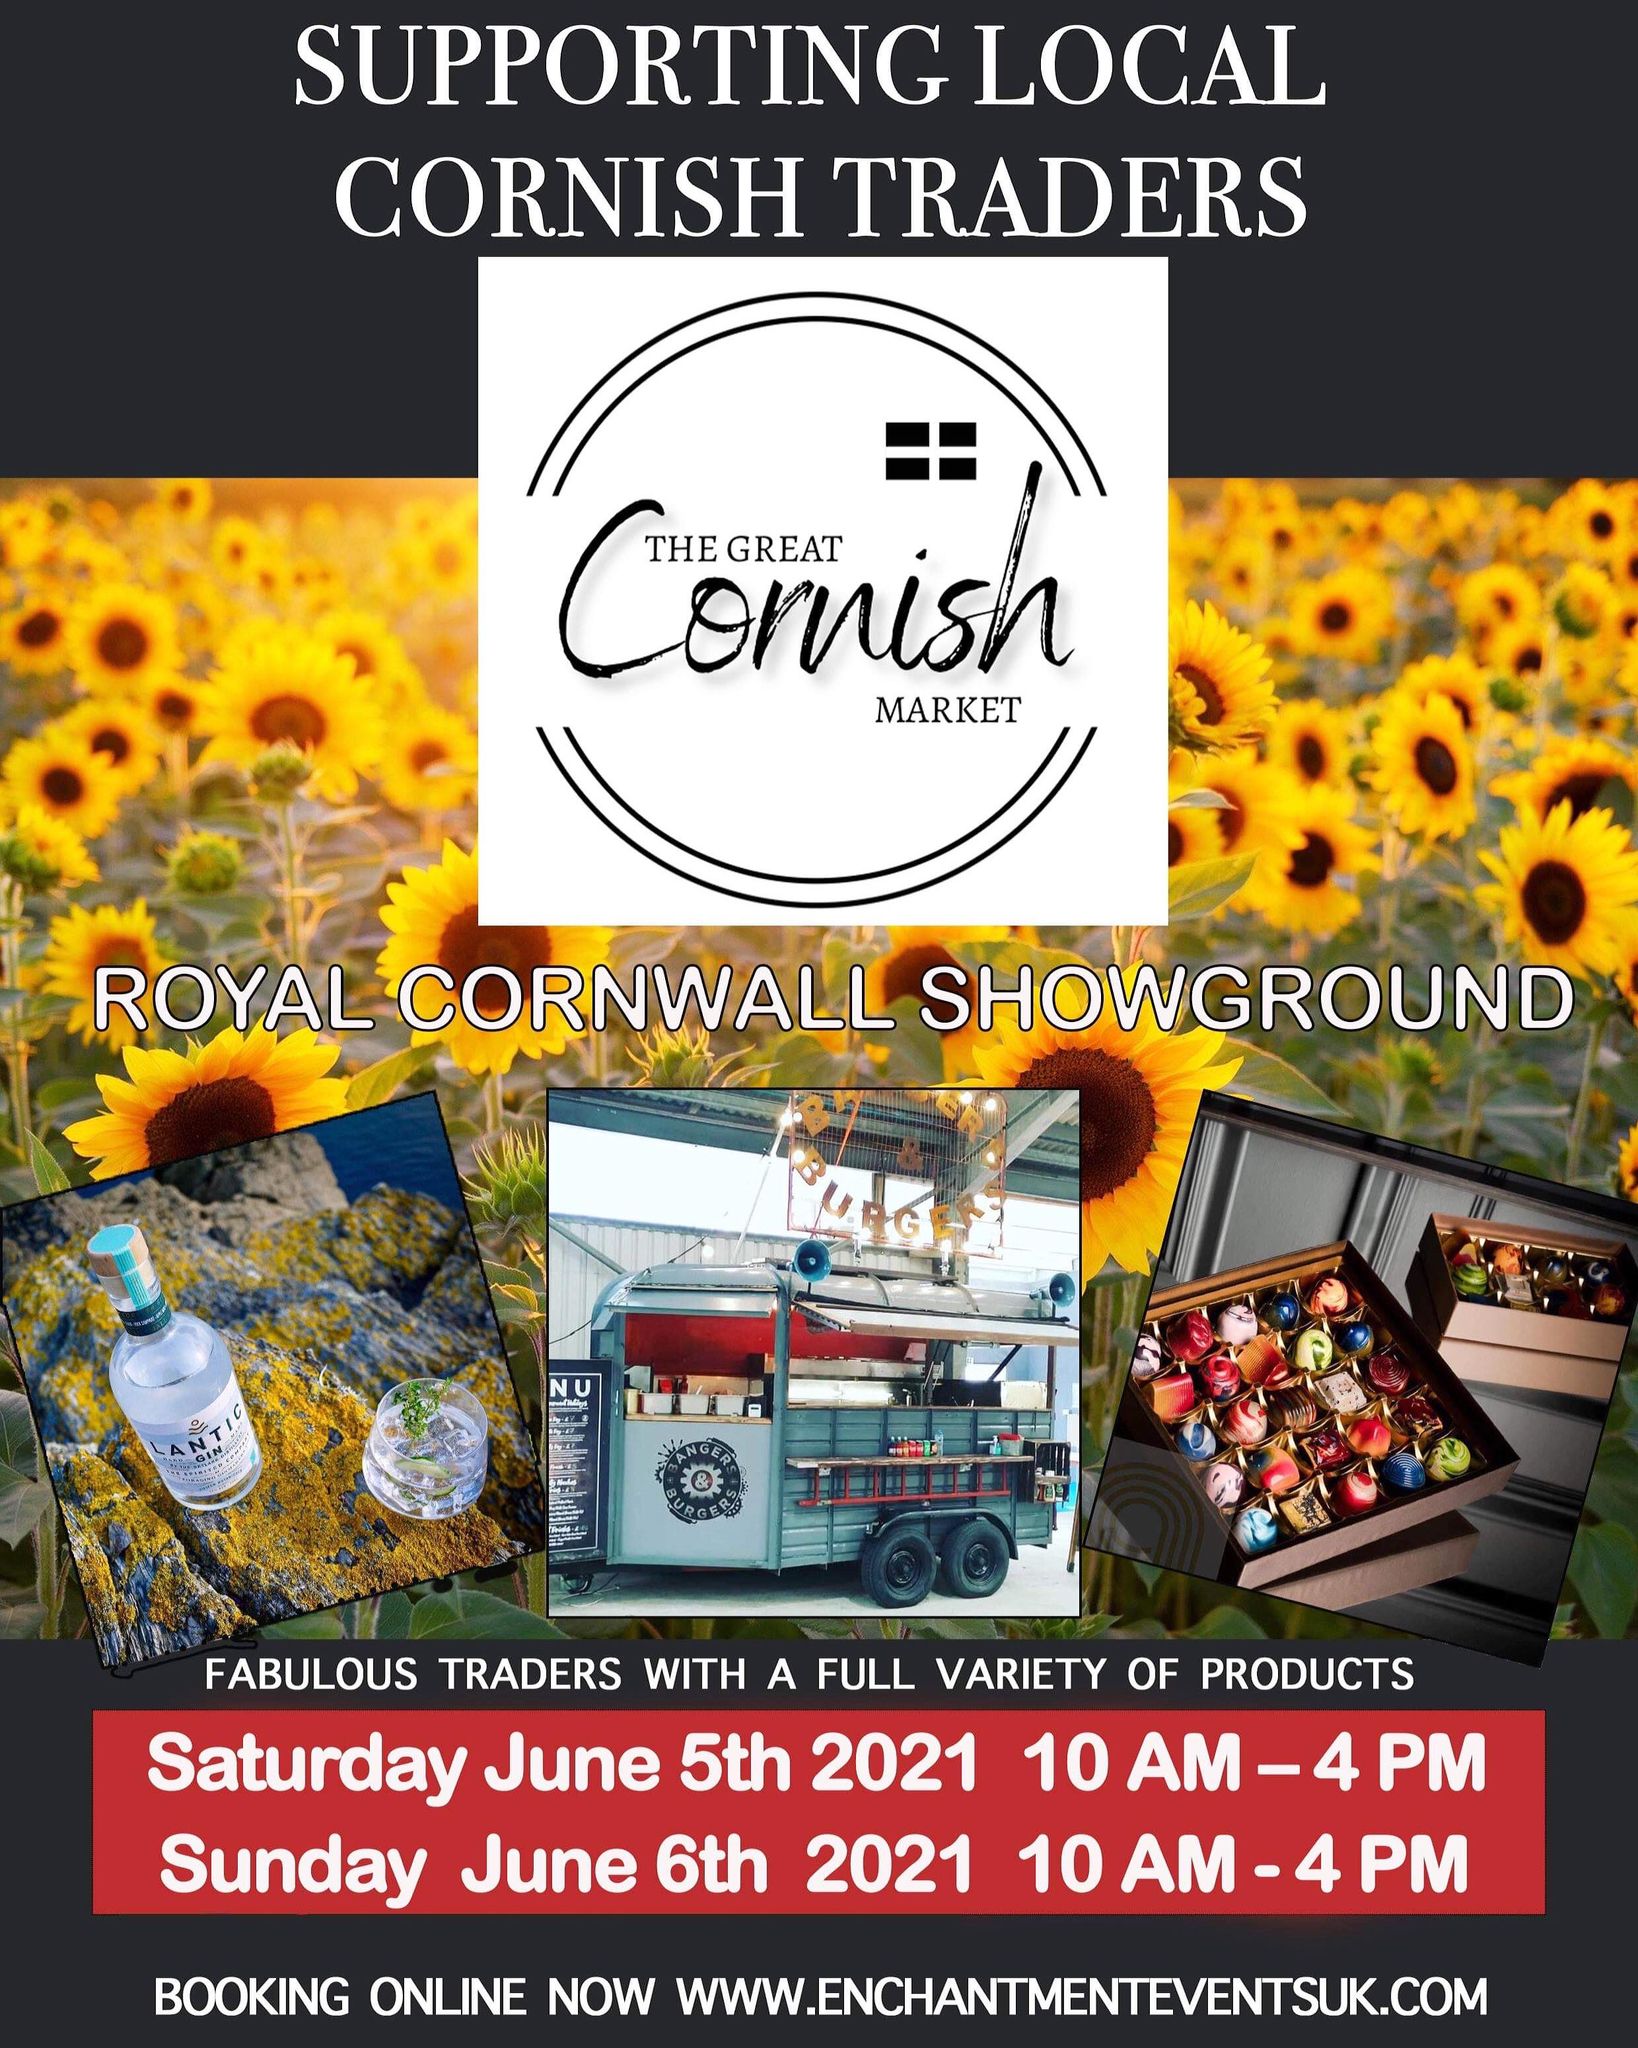 The Great Cornish Market